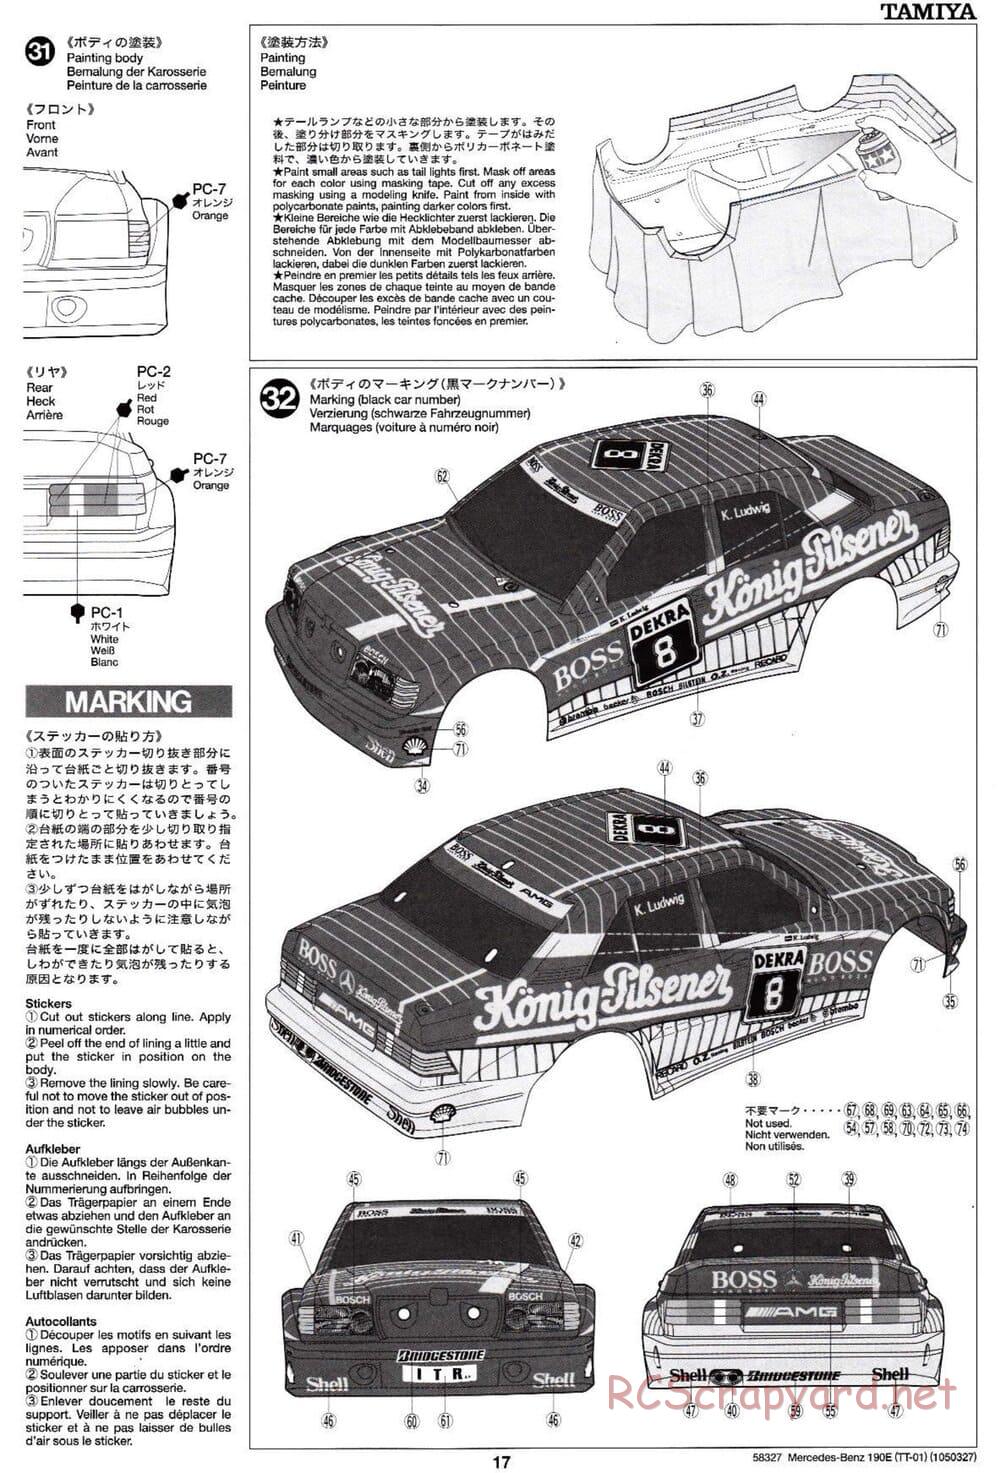 Tamiya - Mercedes Benz 190E Evo.II AMG - TT-01 Chassis - Manual - Page 17